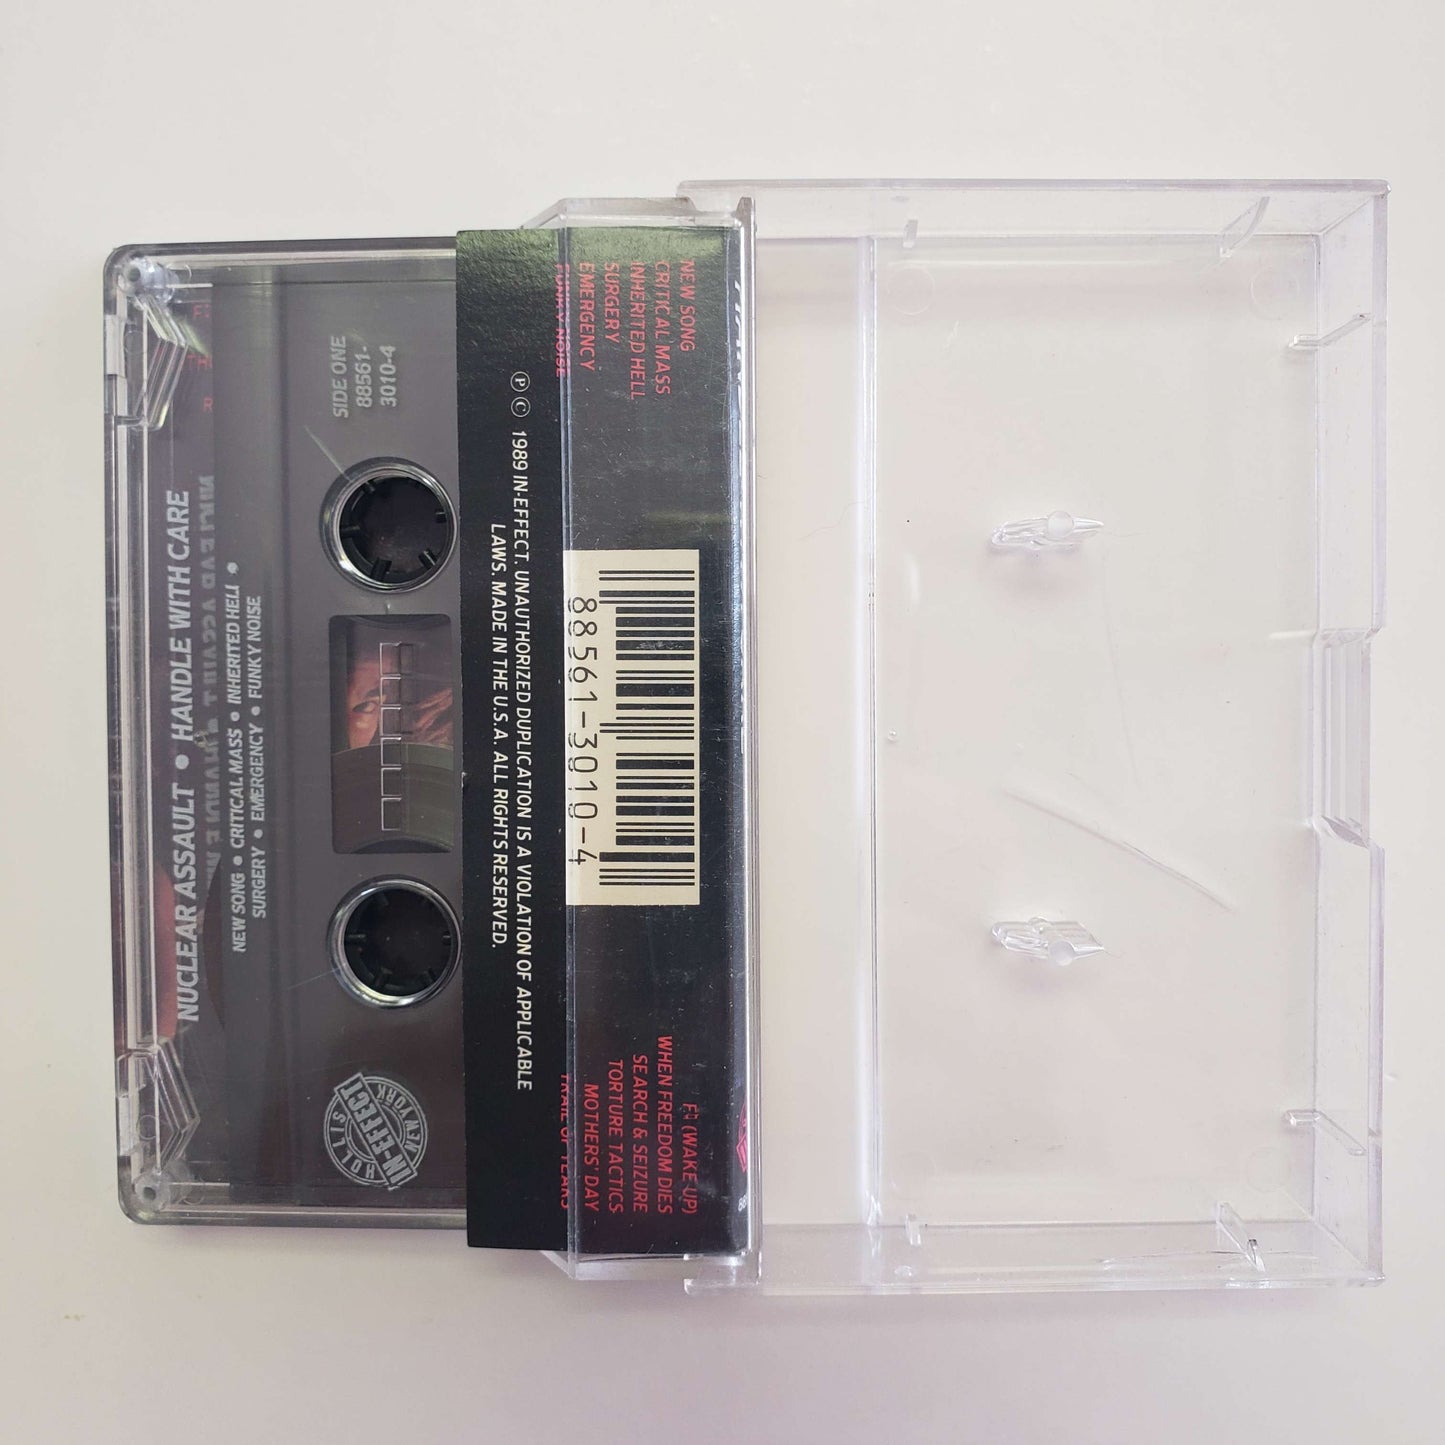 Nuclear Assault - Handle With Care original cassette tape